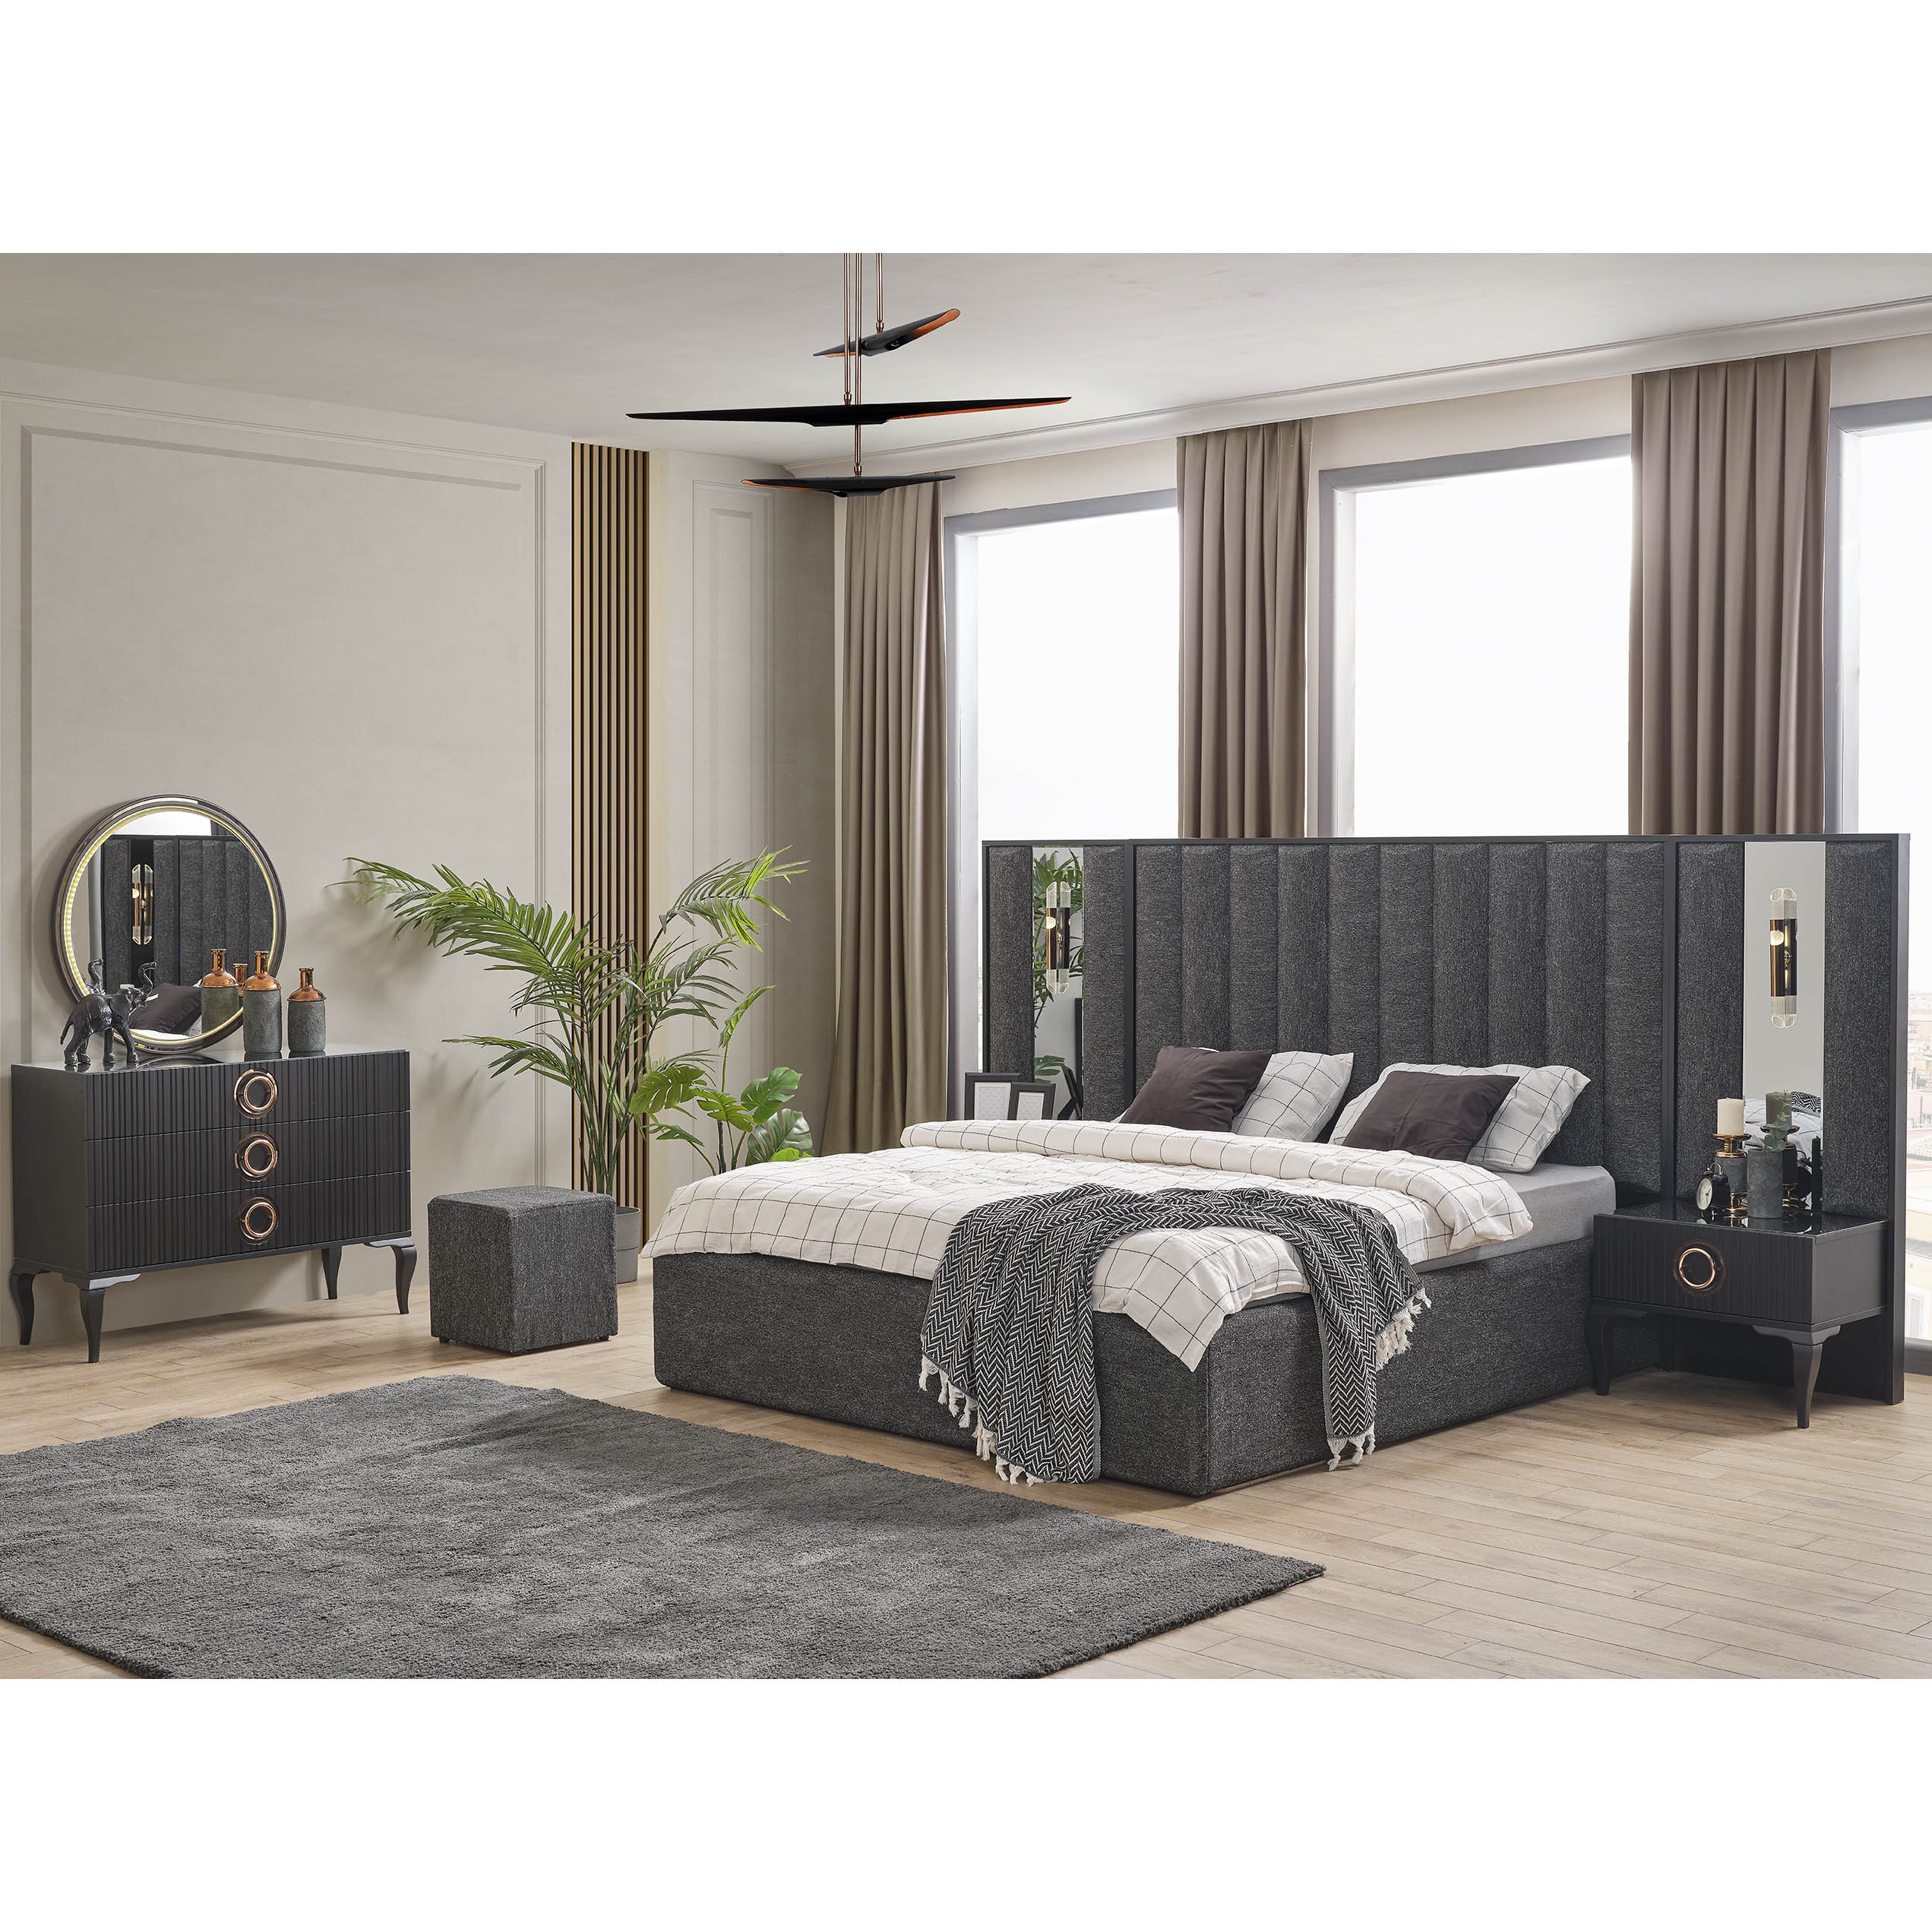 Style Larissa Vol2 Bed With Storage 180x200 cm